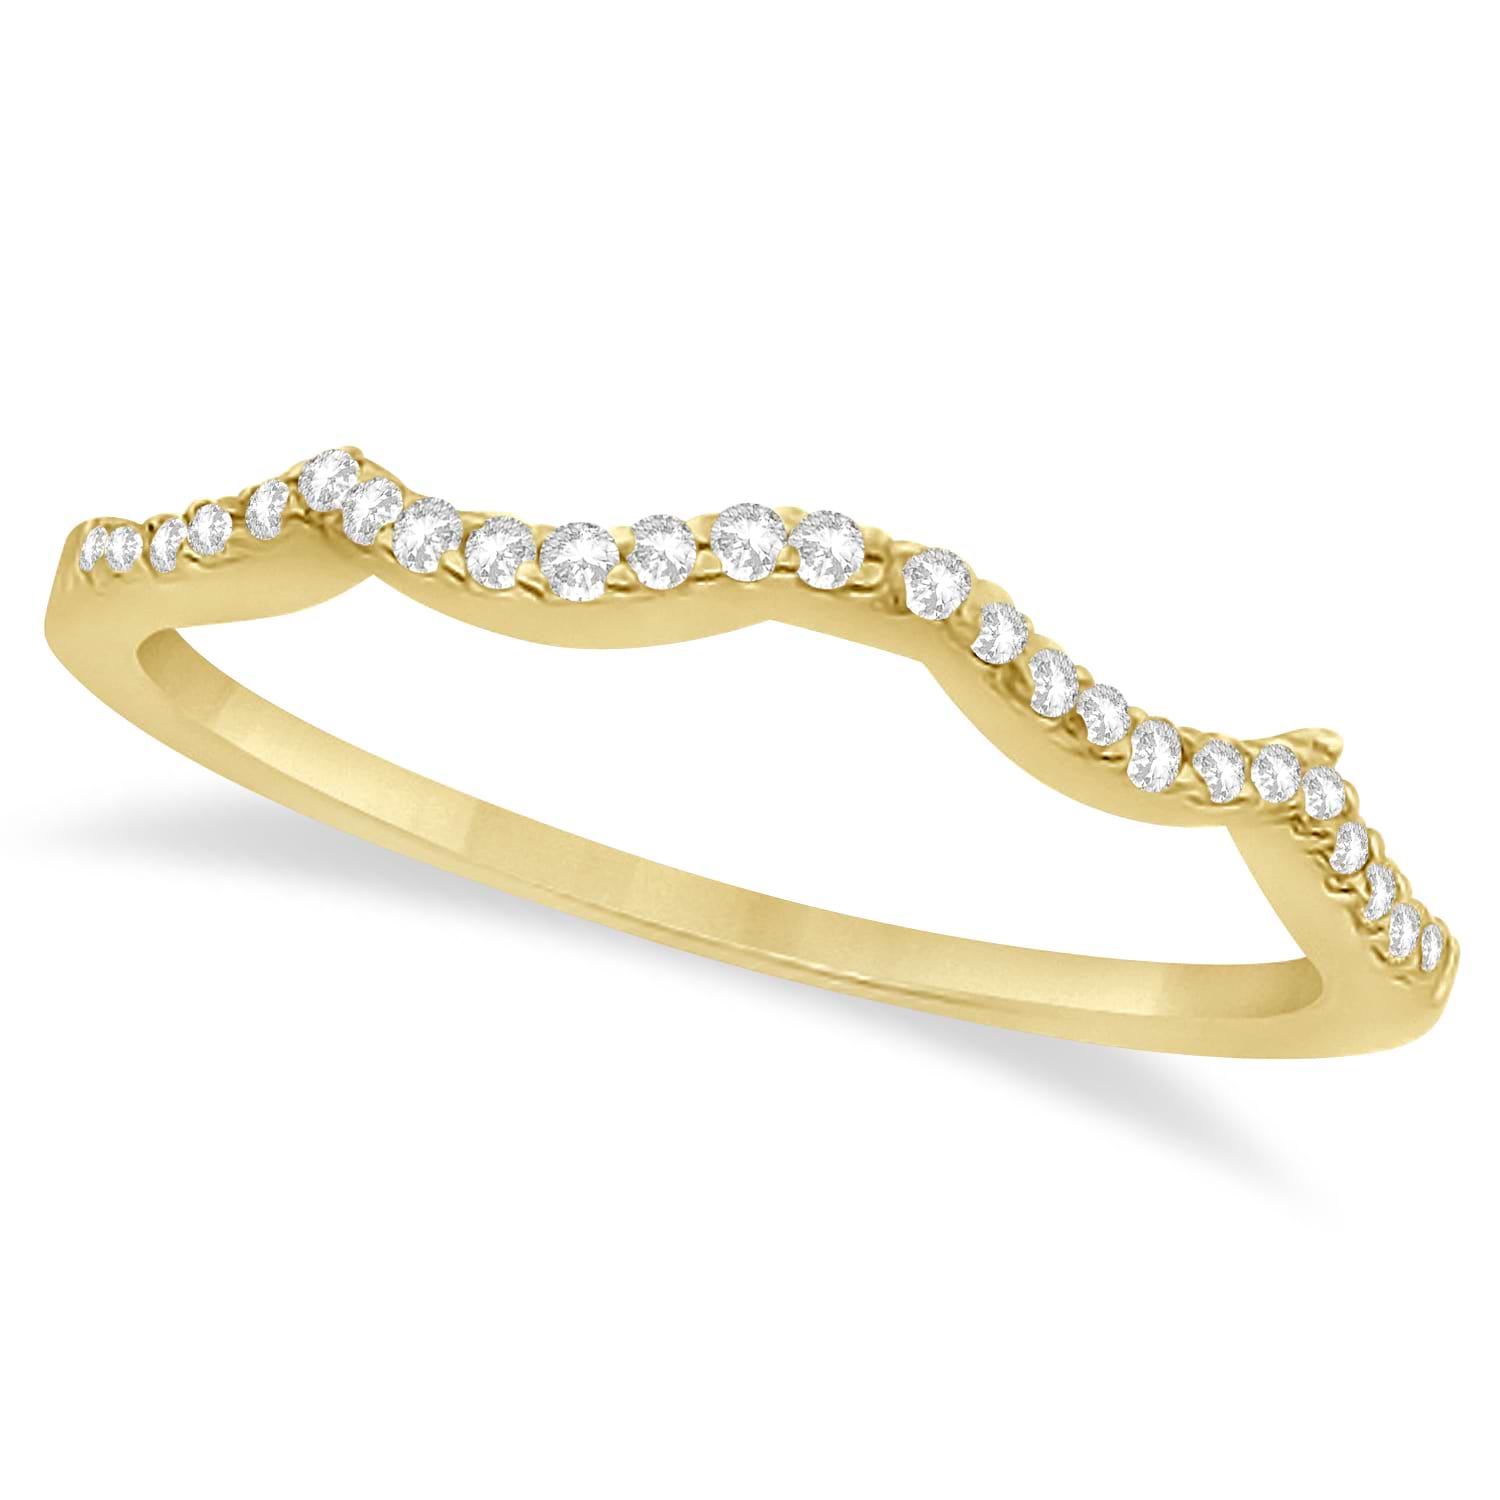 Twisted Infinity Oval Diamond Bridal Set 18k Yellow Gold (0.88ct)